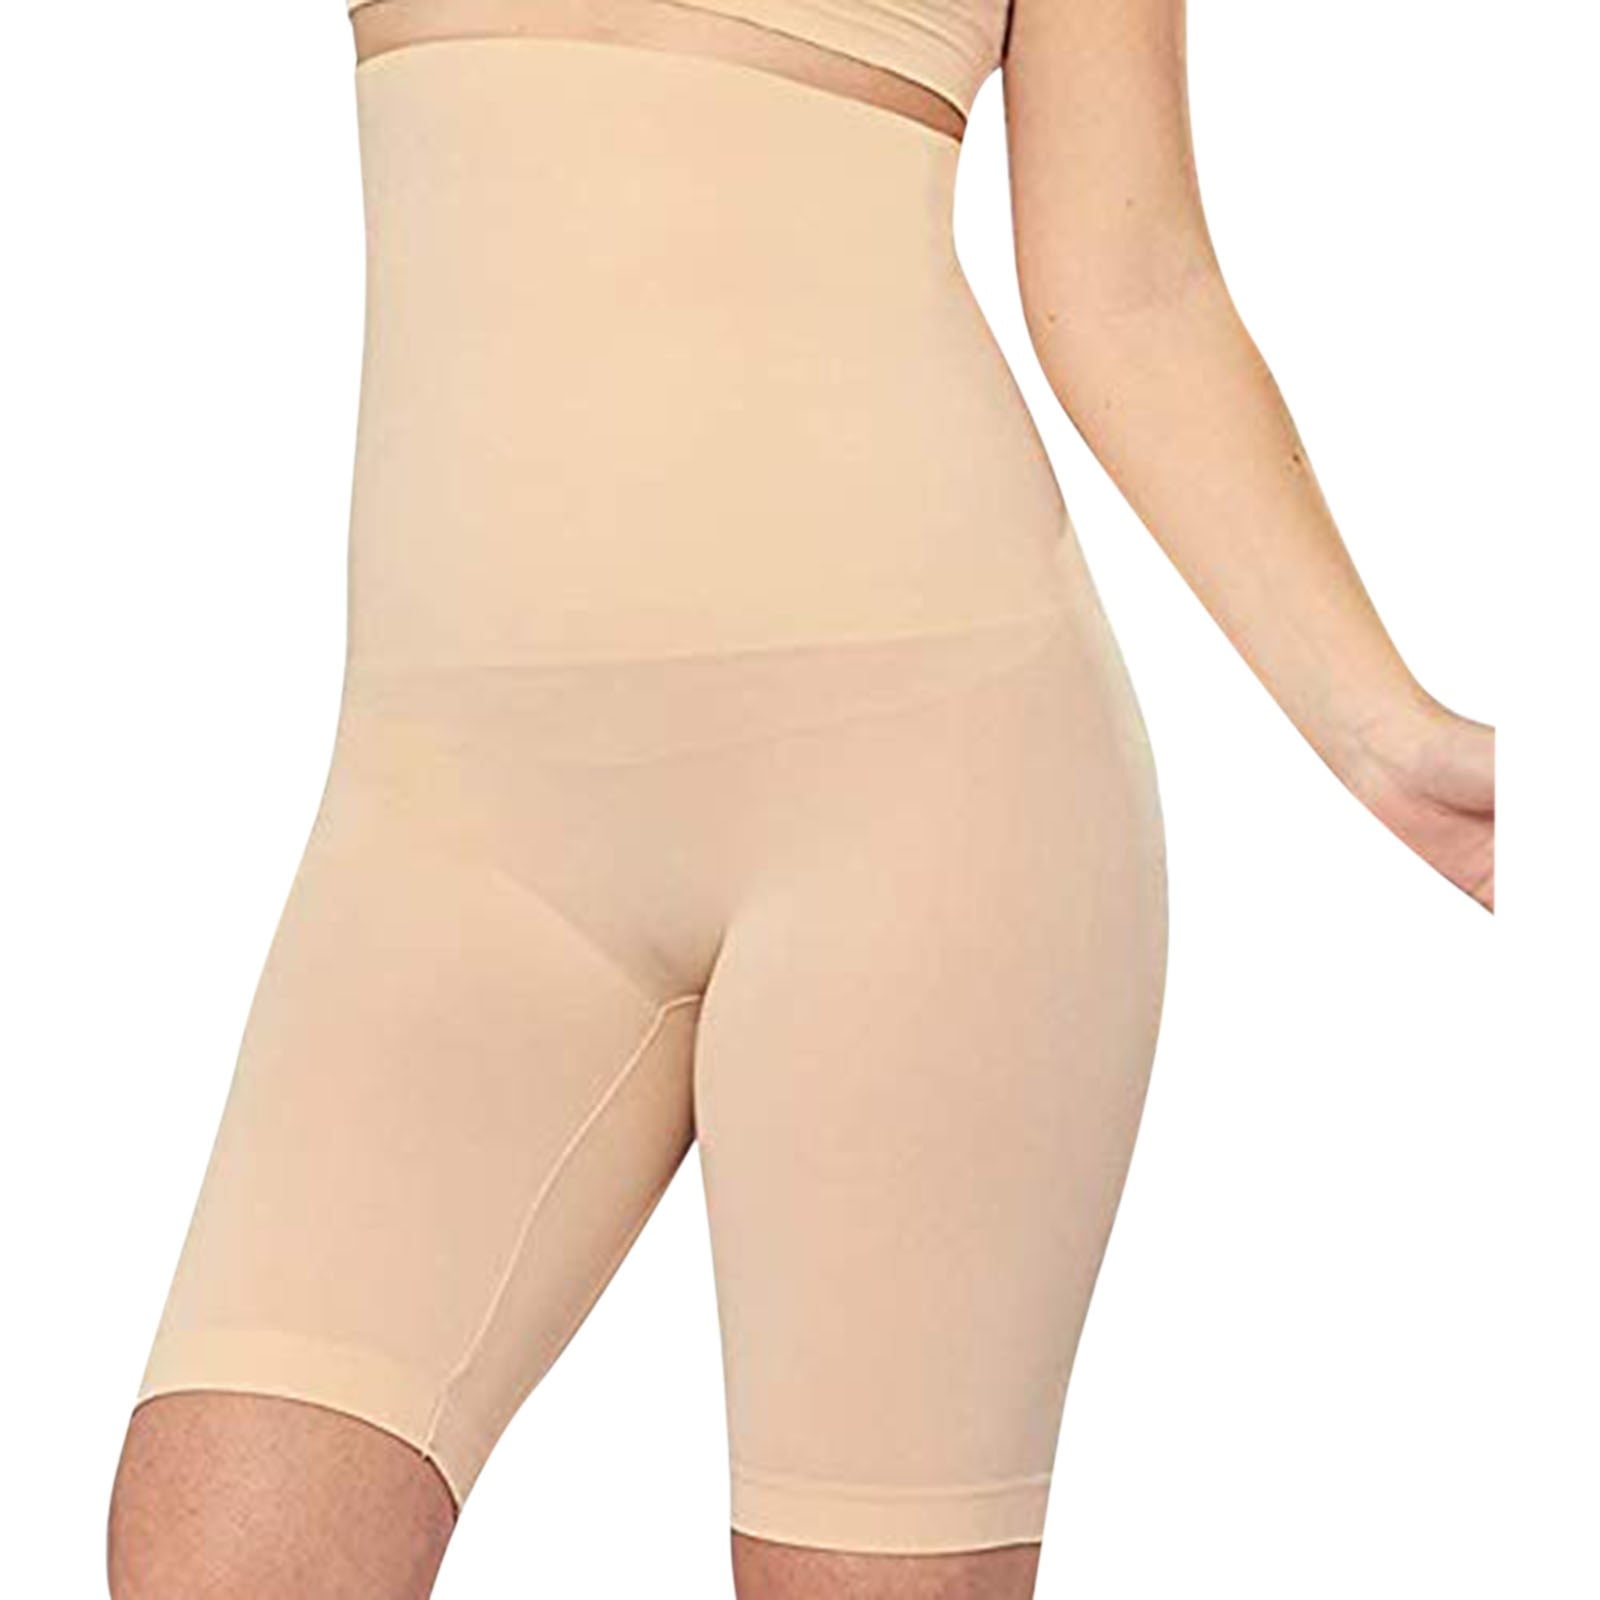 Youloveit Body Sculpting Shorts Female Butt Lift Waist Training Panties  Thighs Medium Suit Bodysui Tight Control Buttock